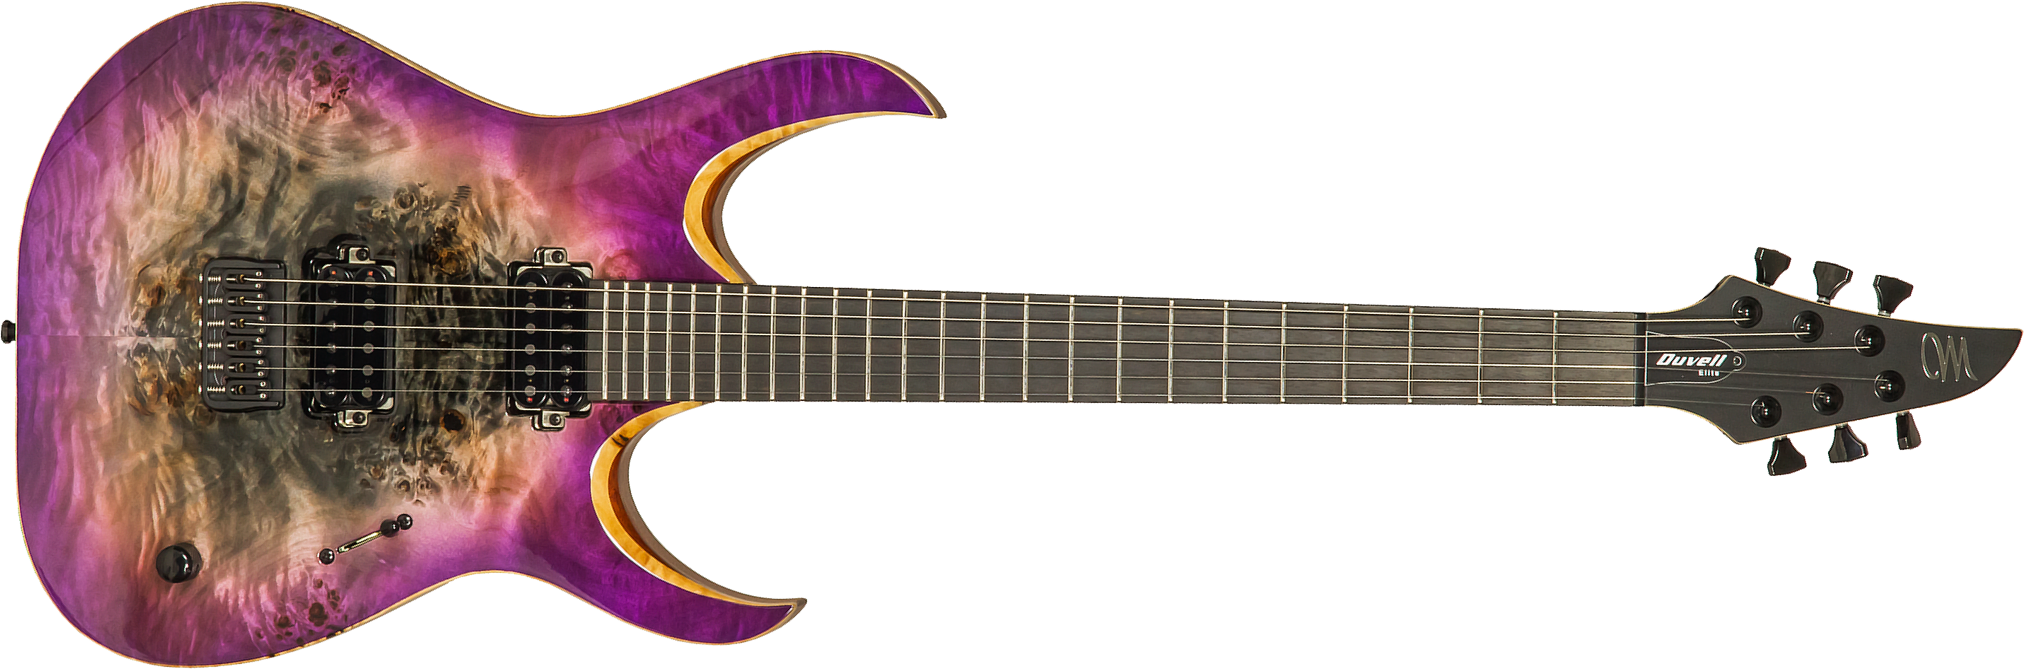 Duvell Elite 6 #DF2105470 - supernova purple Metal electric guitar 